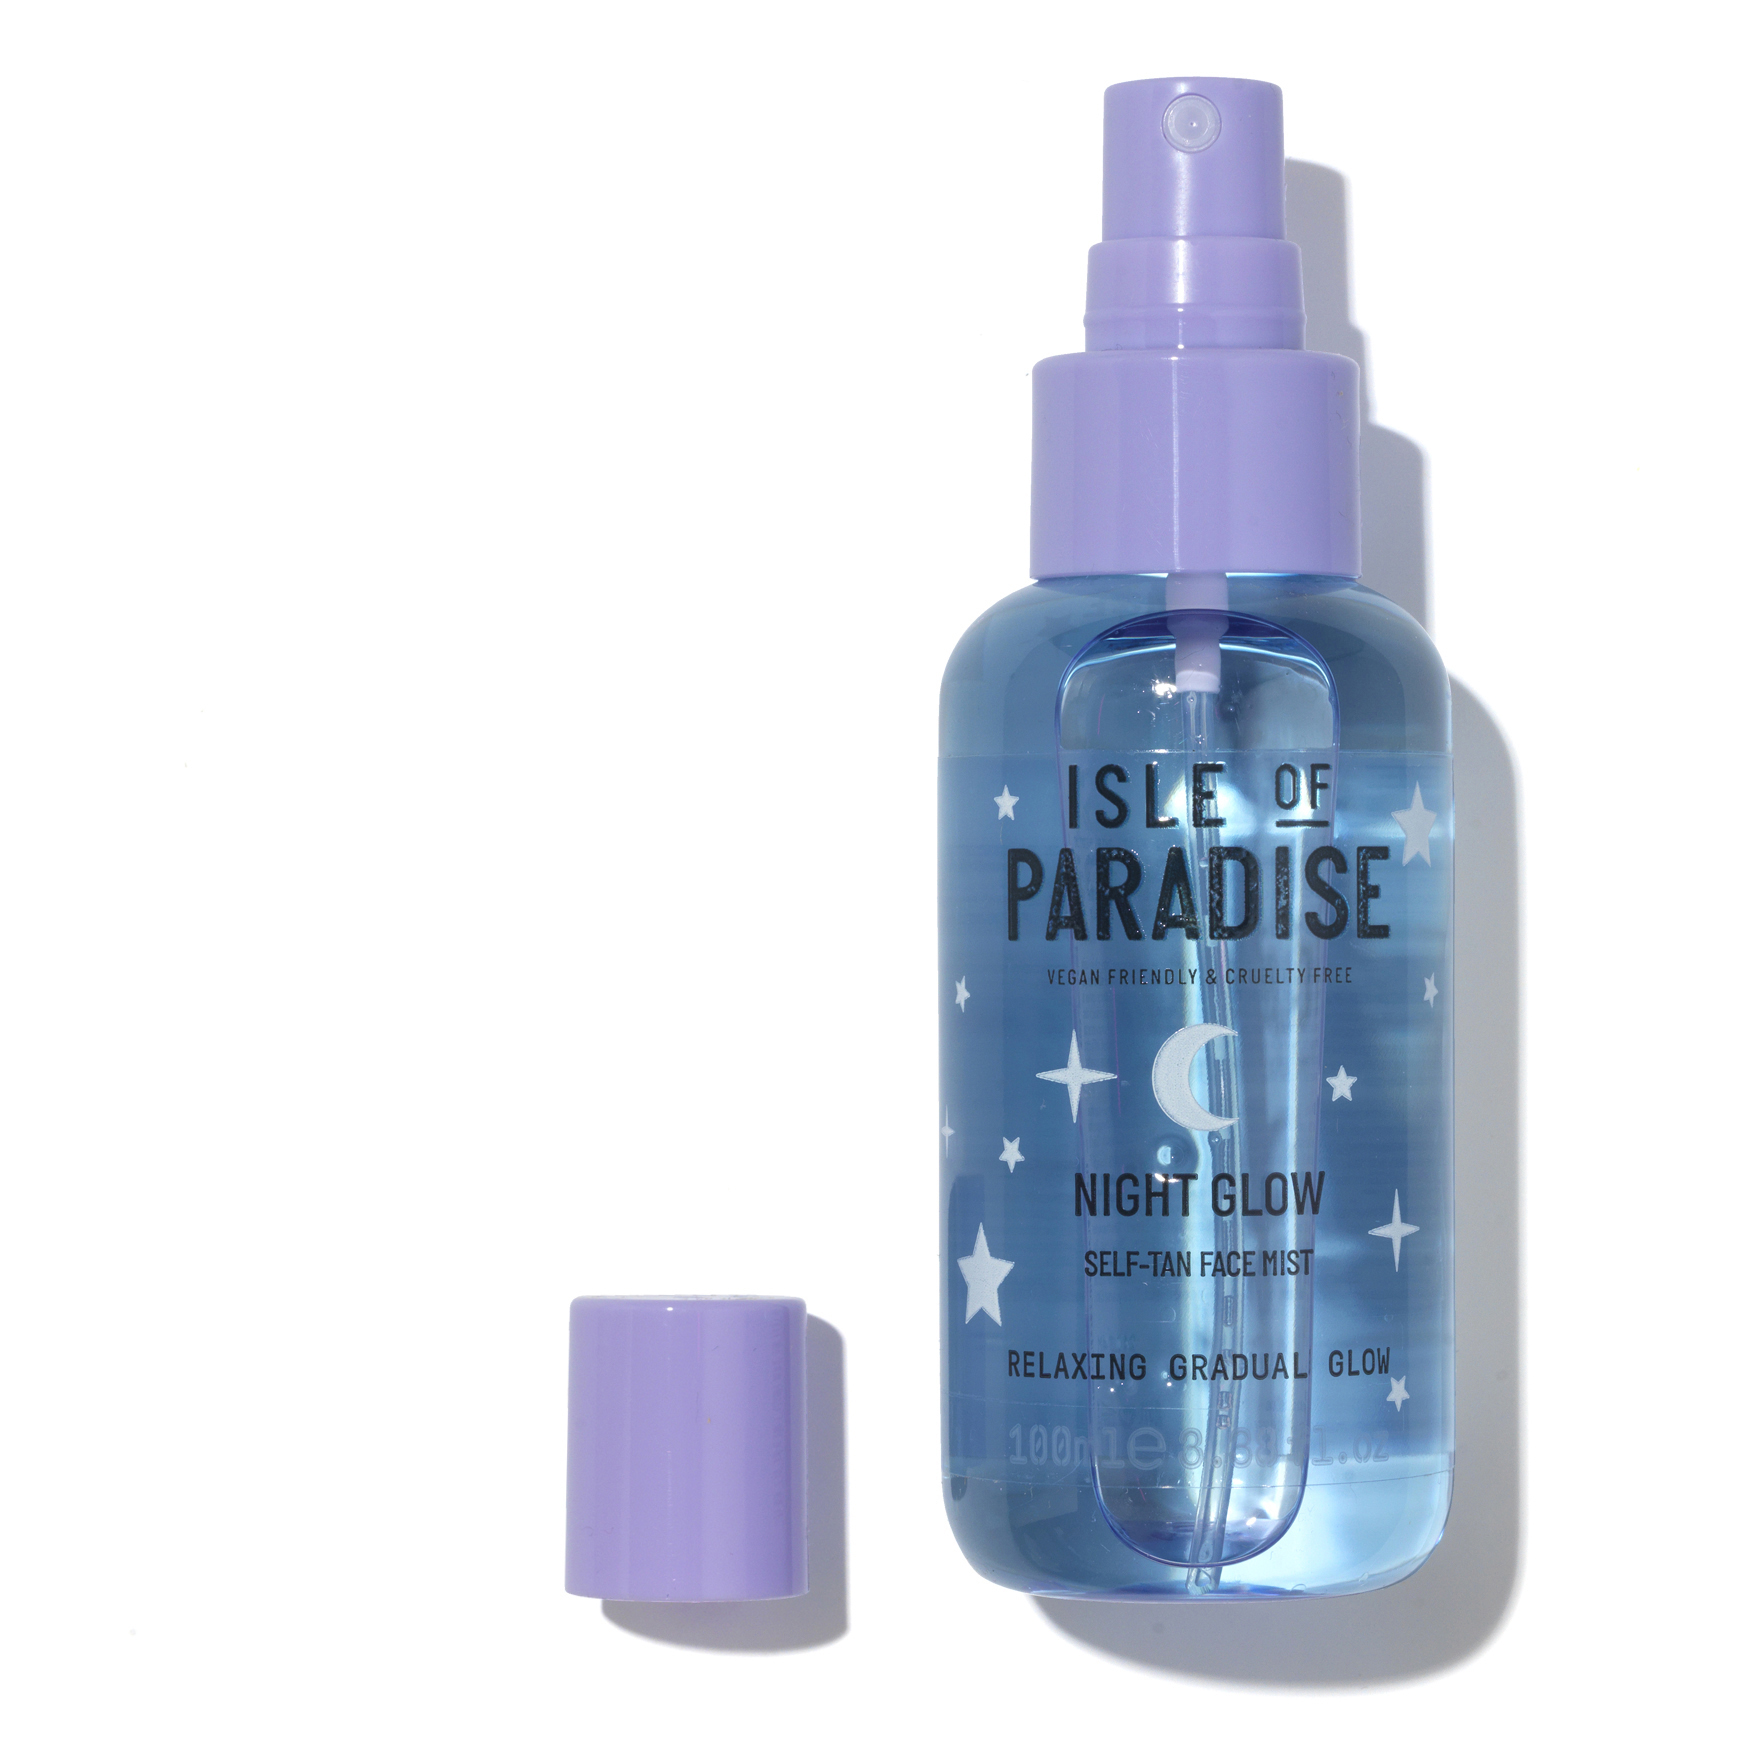 Isle of Paradise Night Glow Self Tan Face Mist | Space NK